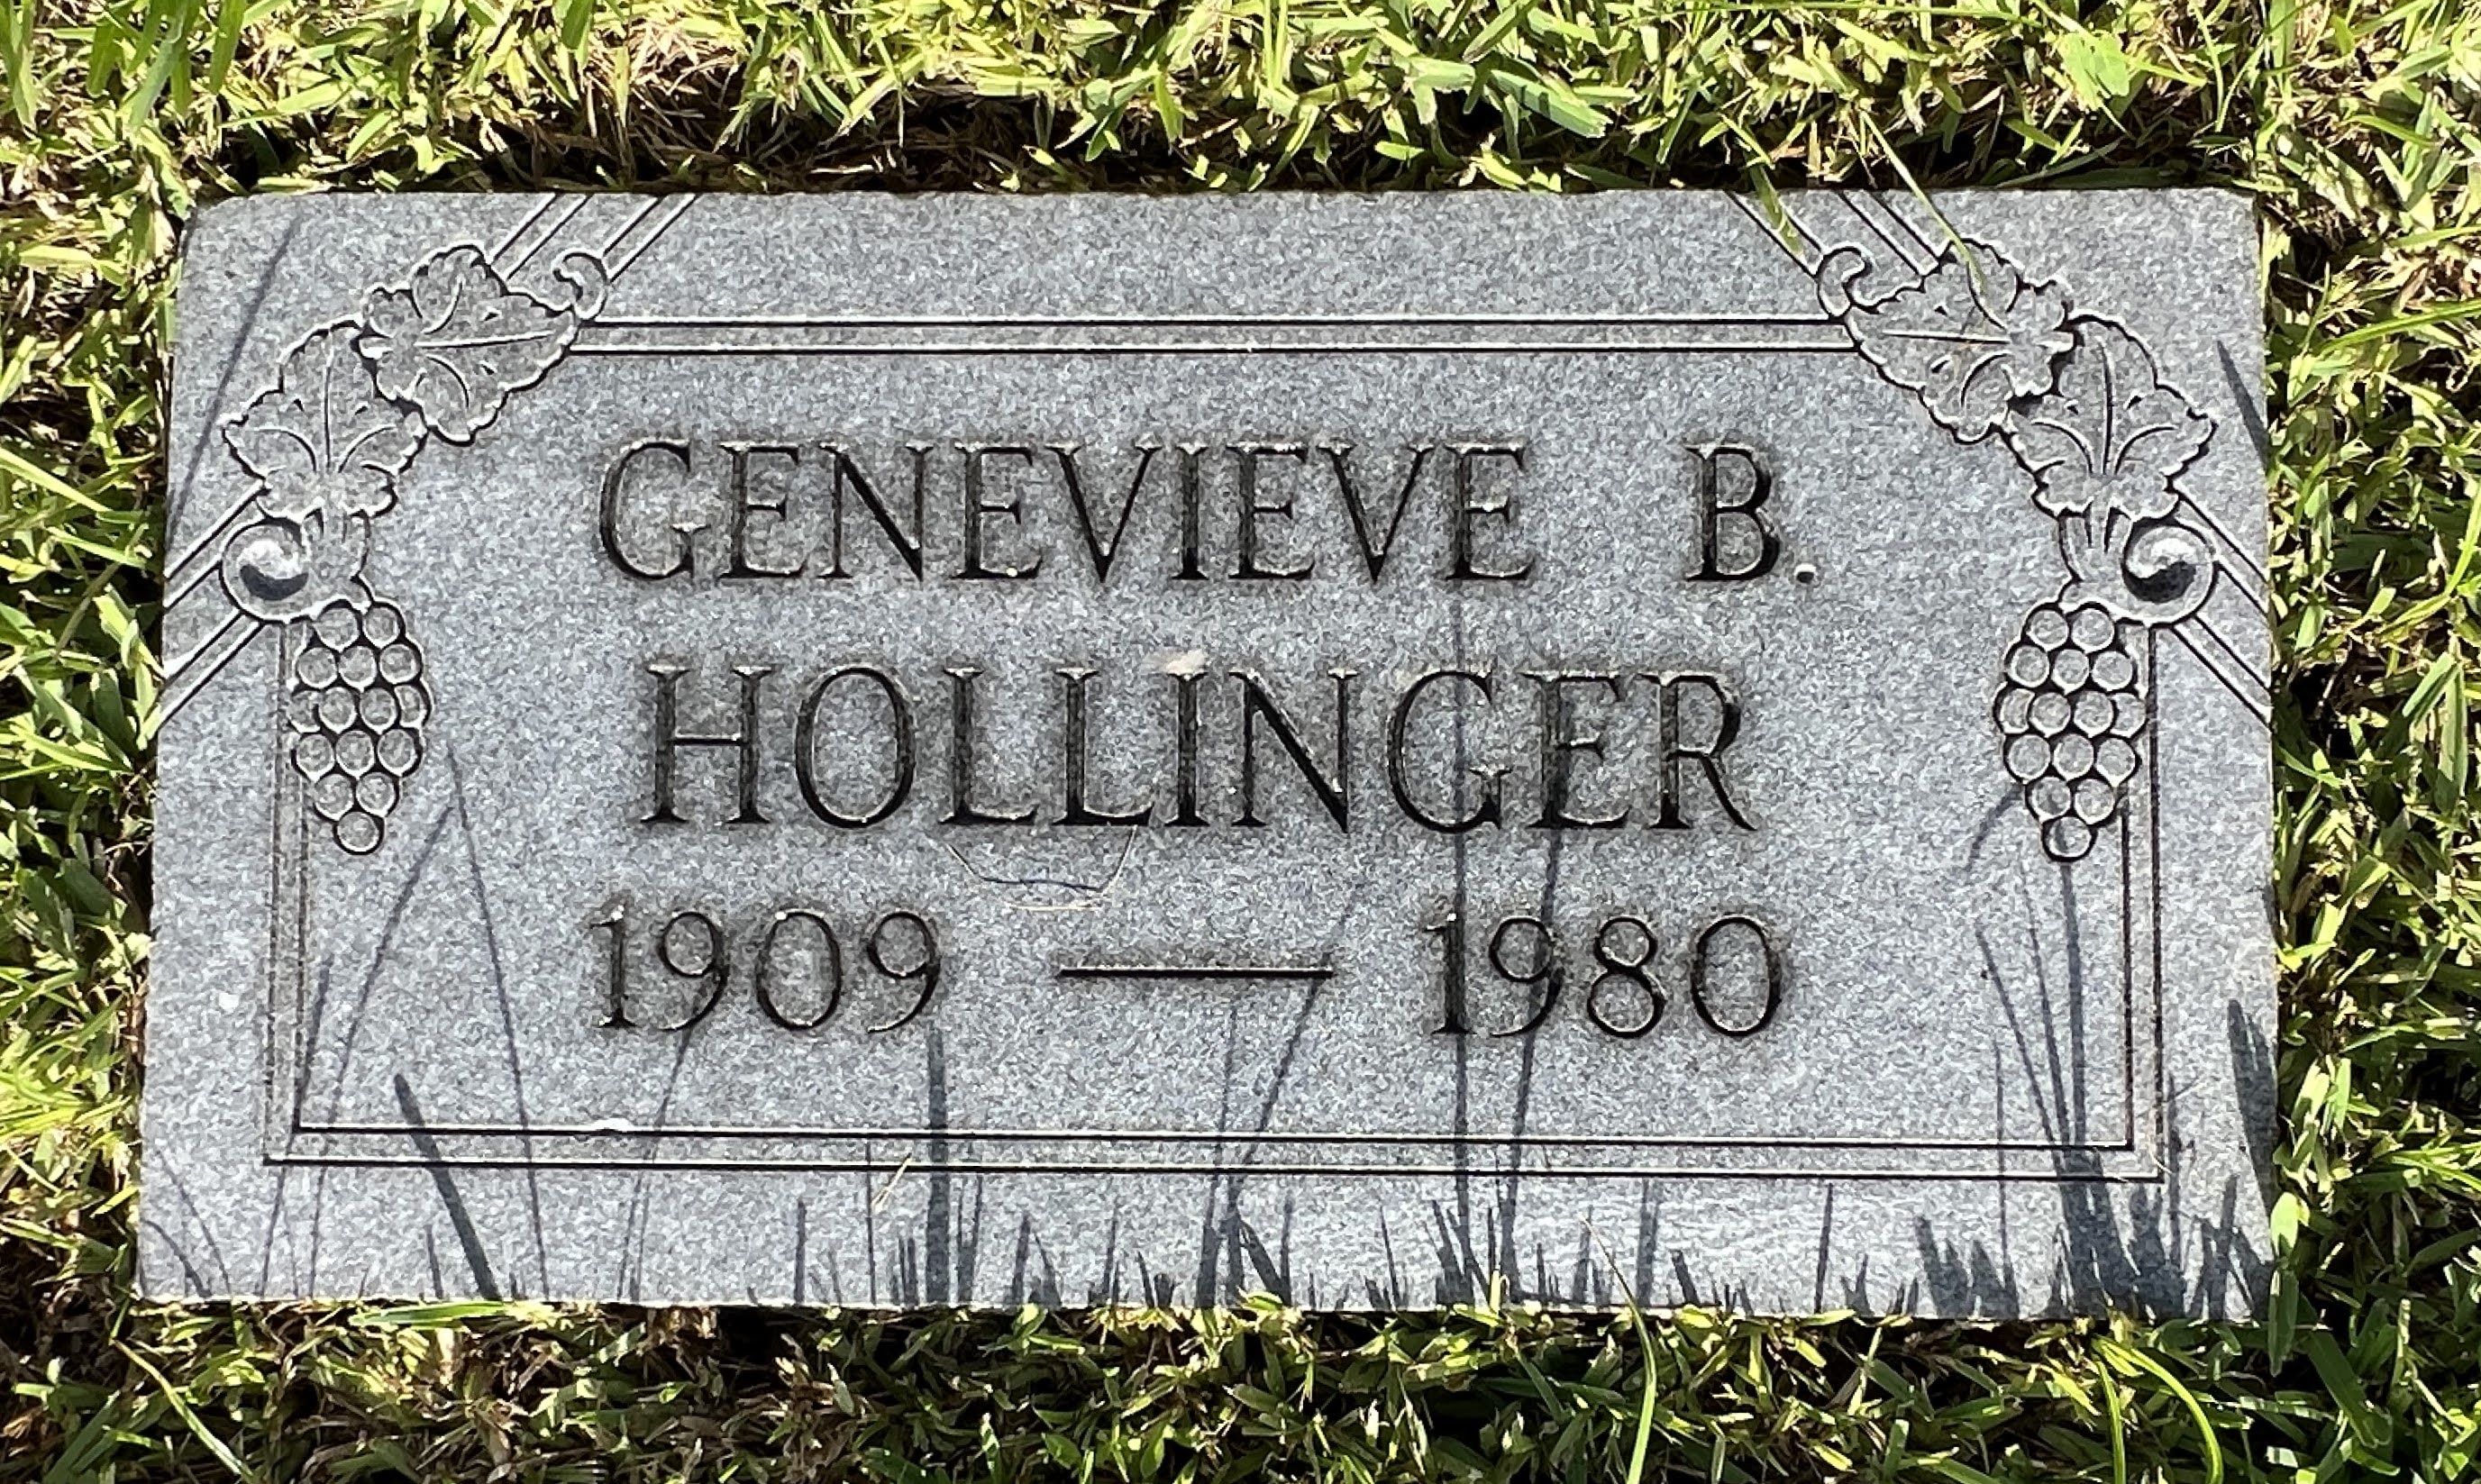 Genevieve B Hollinger